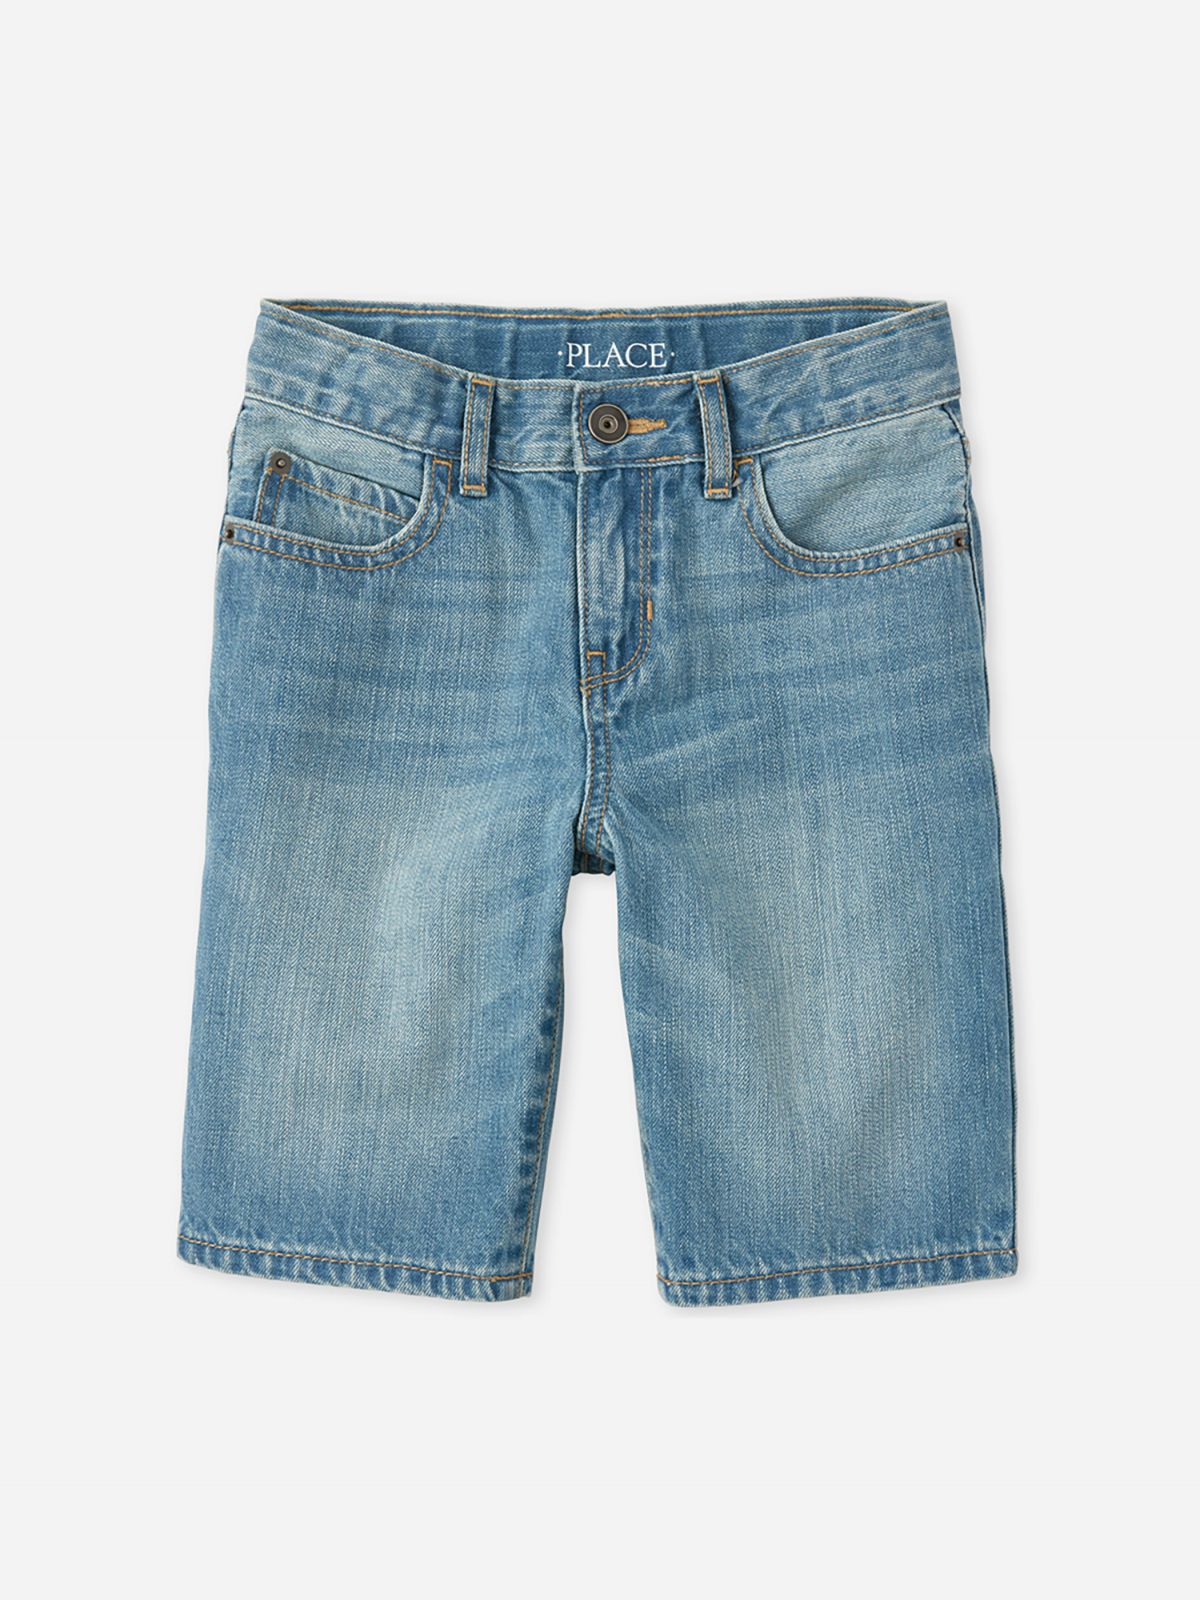  מכנסי ג'ינס קצרים / בנים של THE CHILDREN'S PLACE 